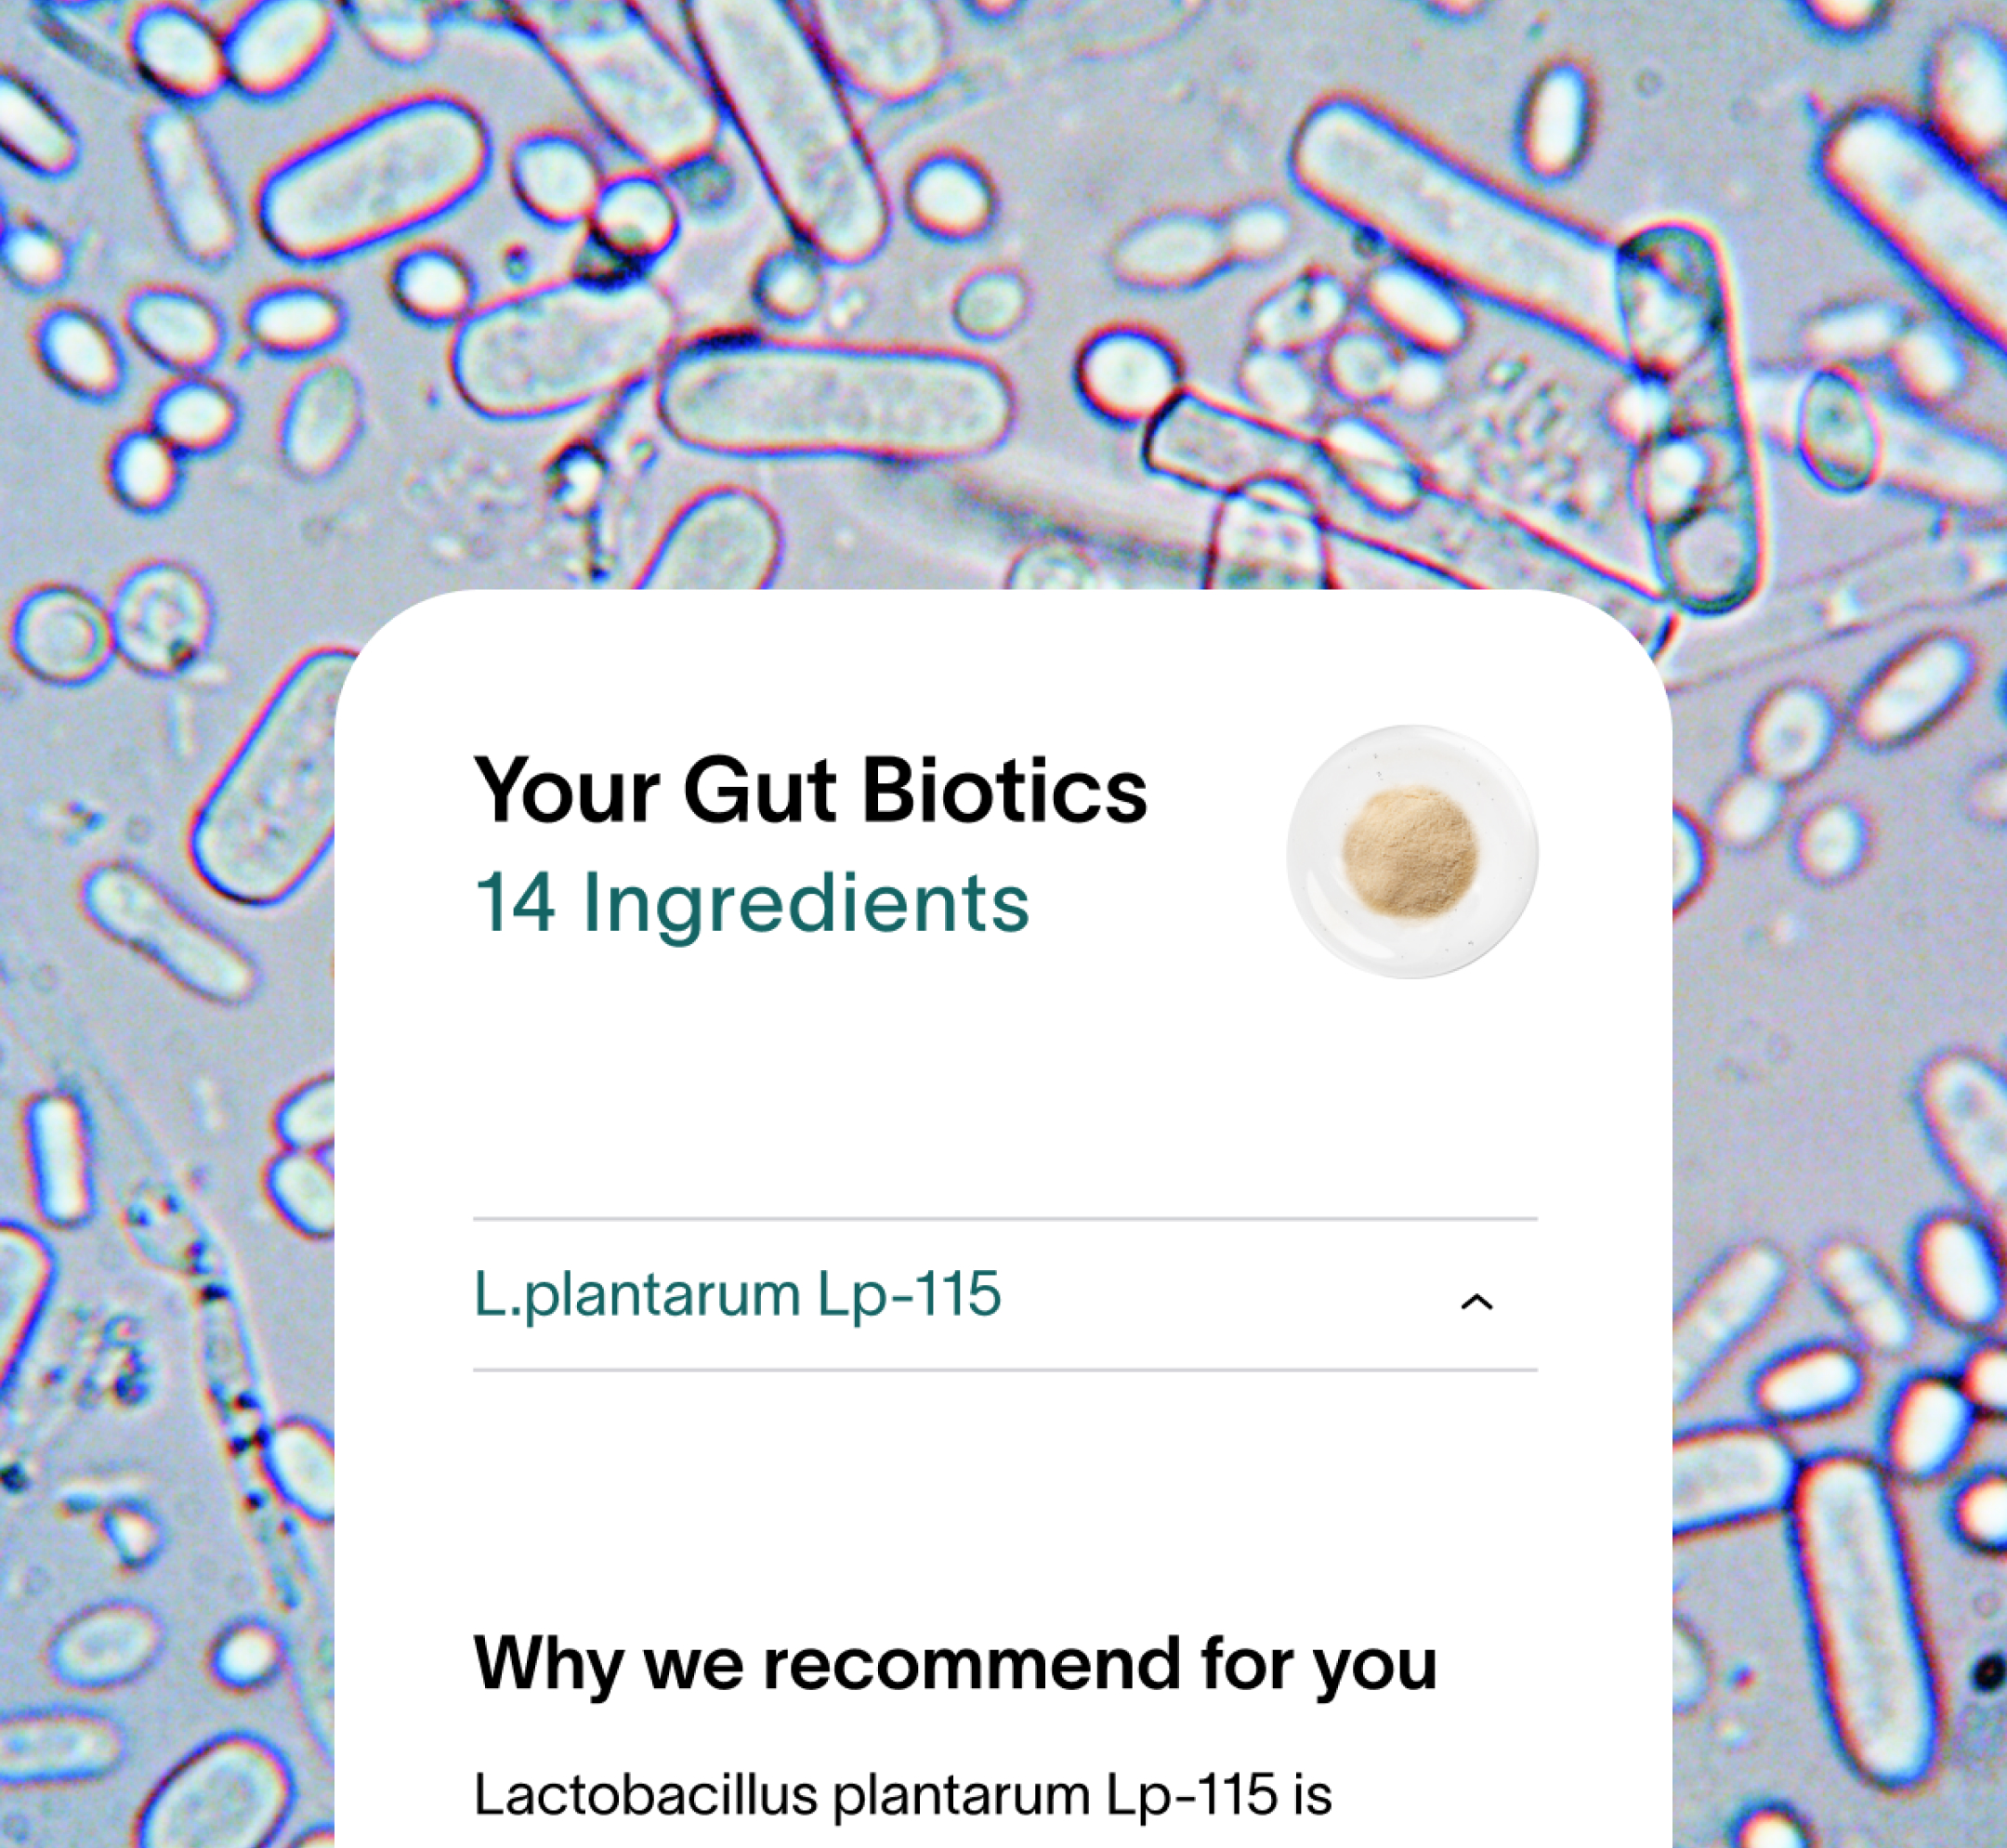 Viome - Your Gut Biotics